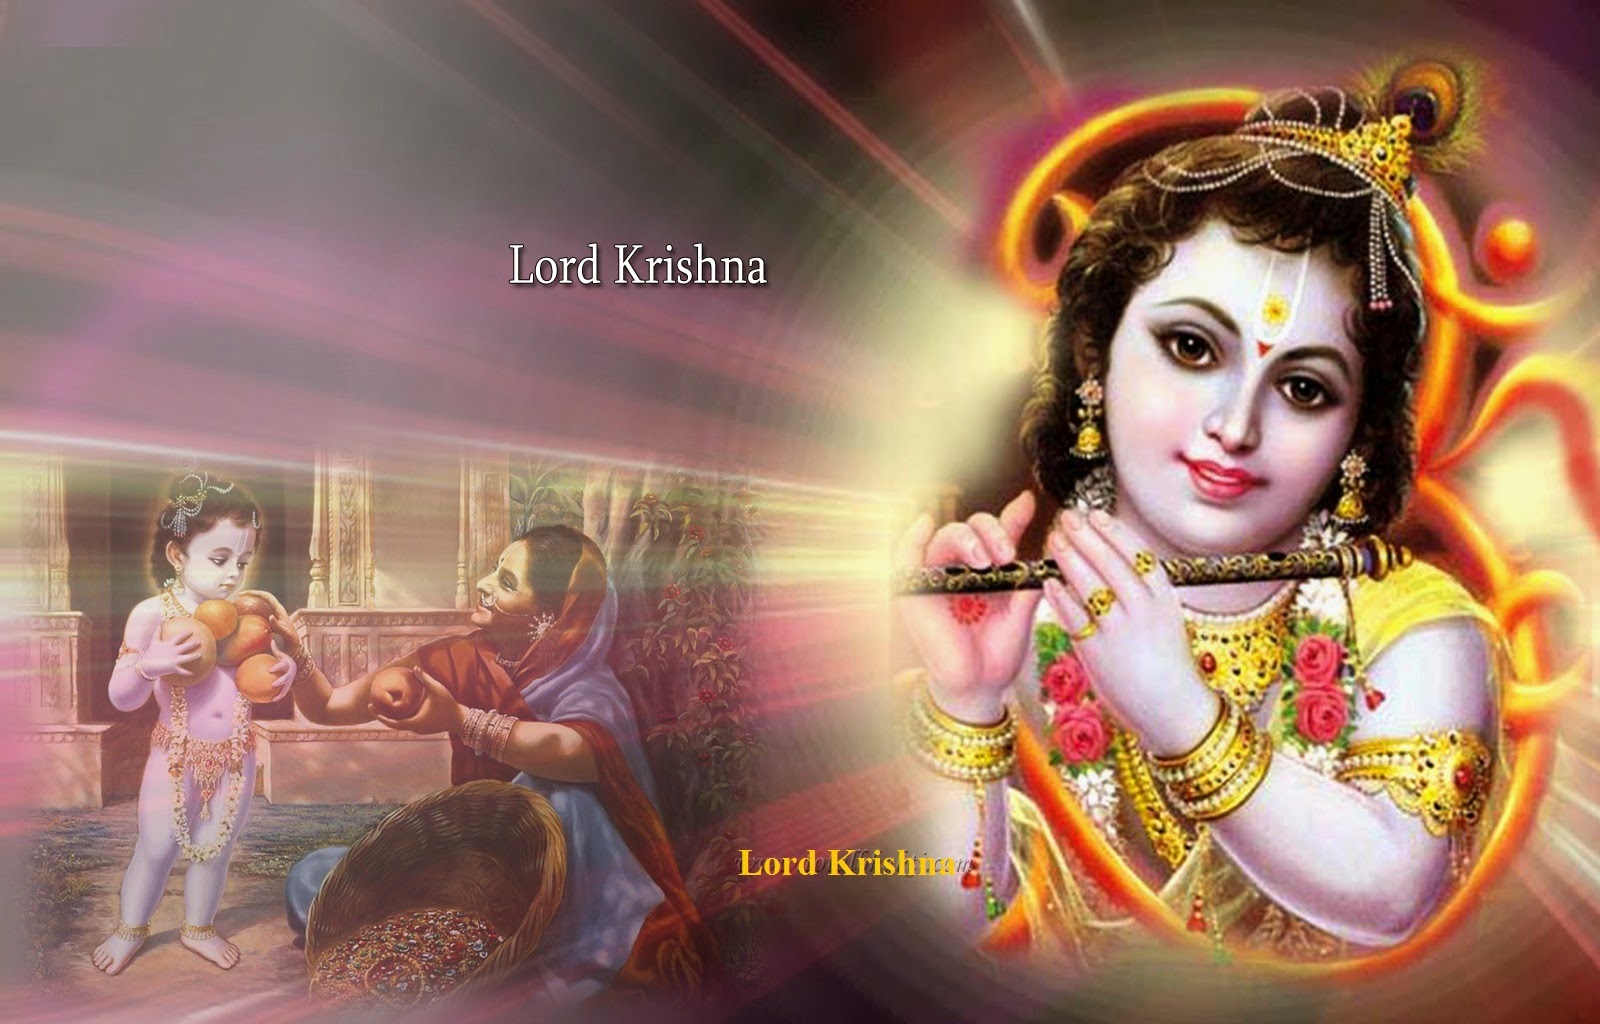 Festival Chaska: Full Size Lord Krishna Photo for Android Mobile